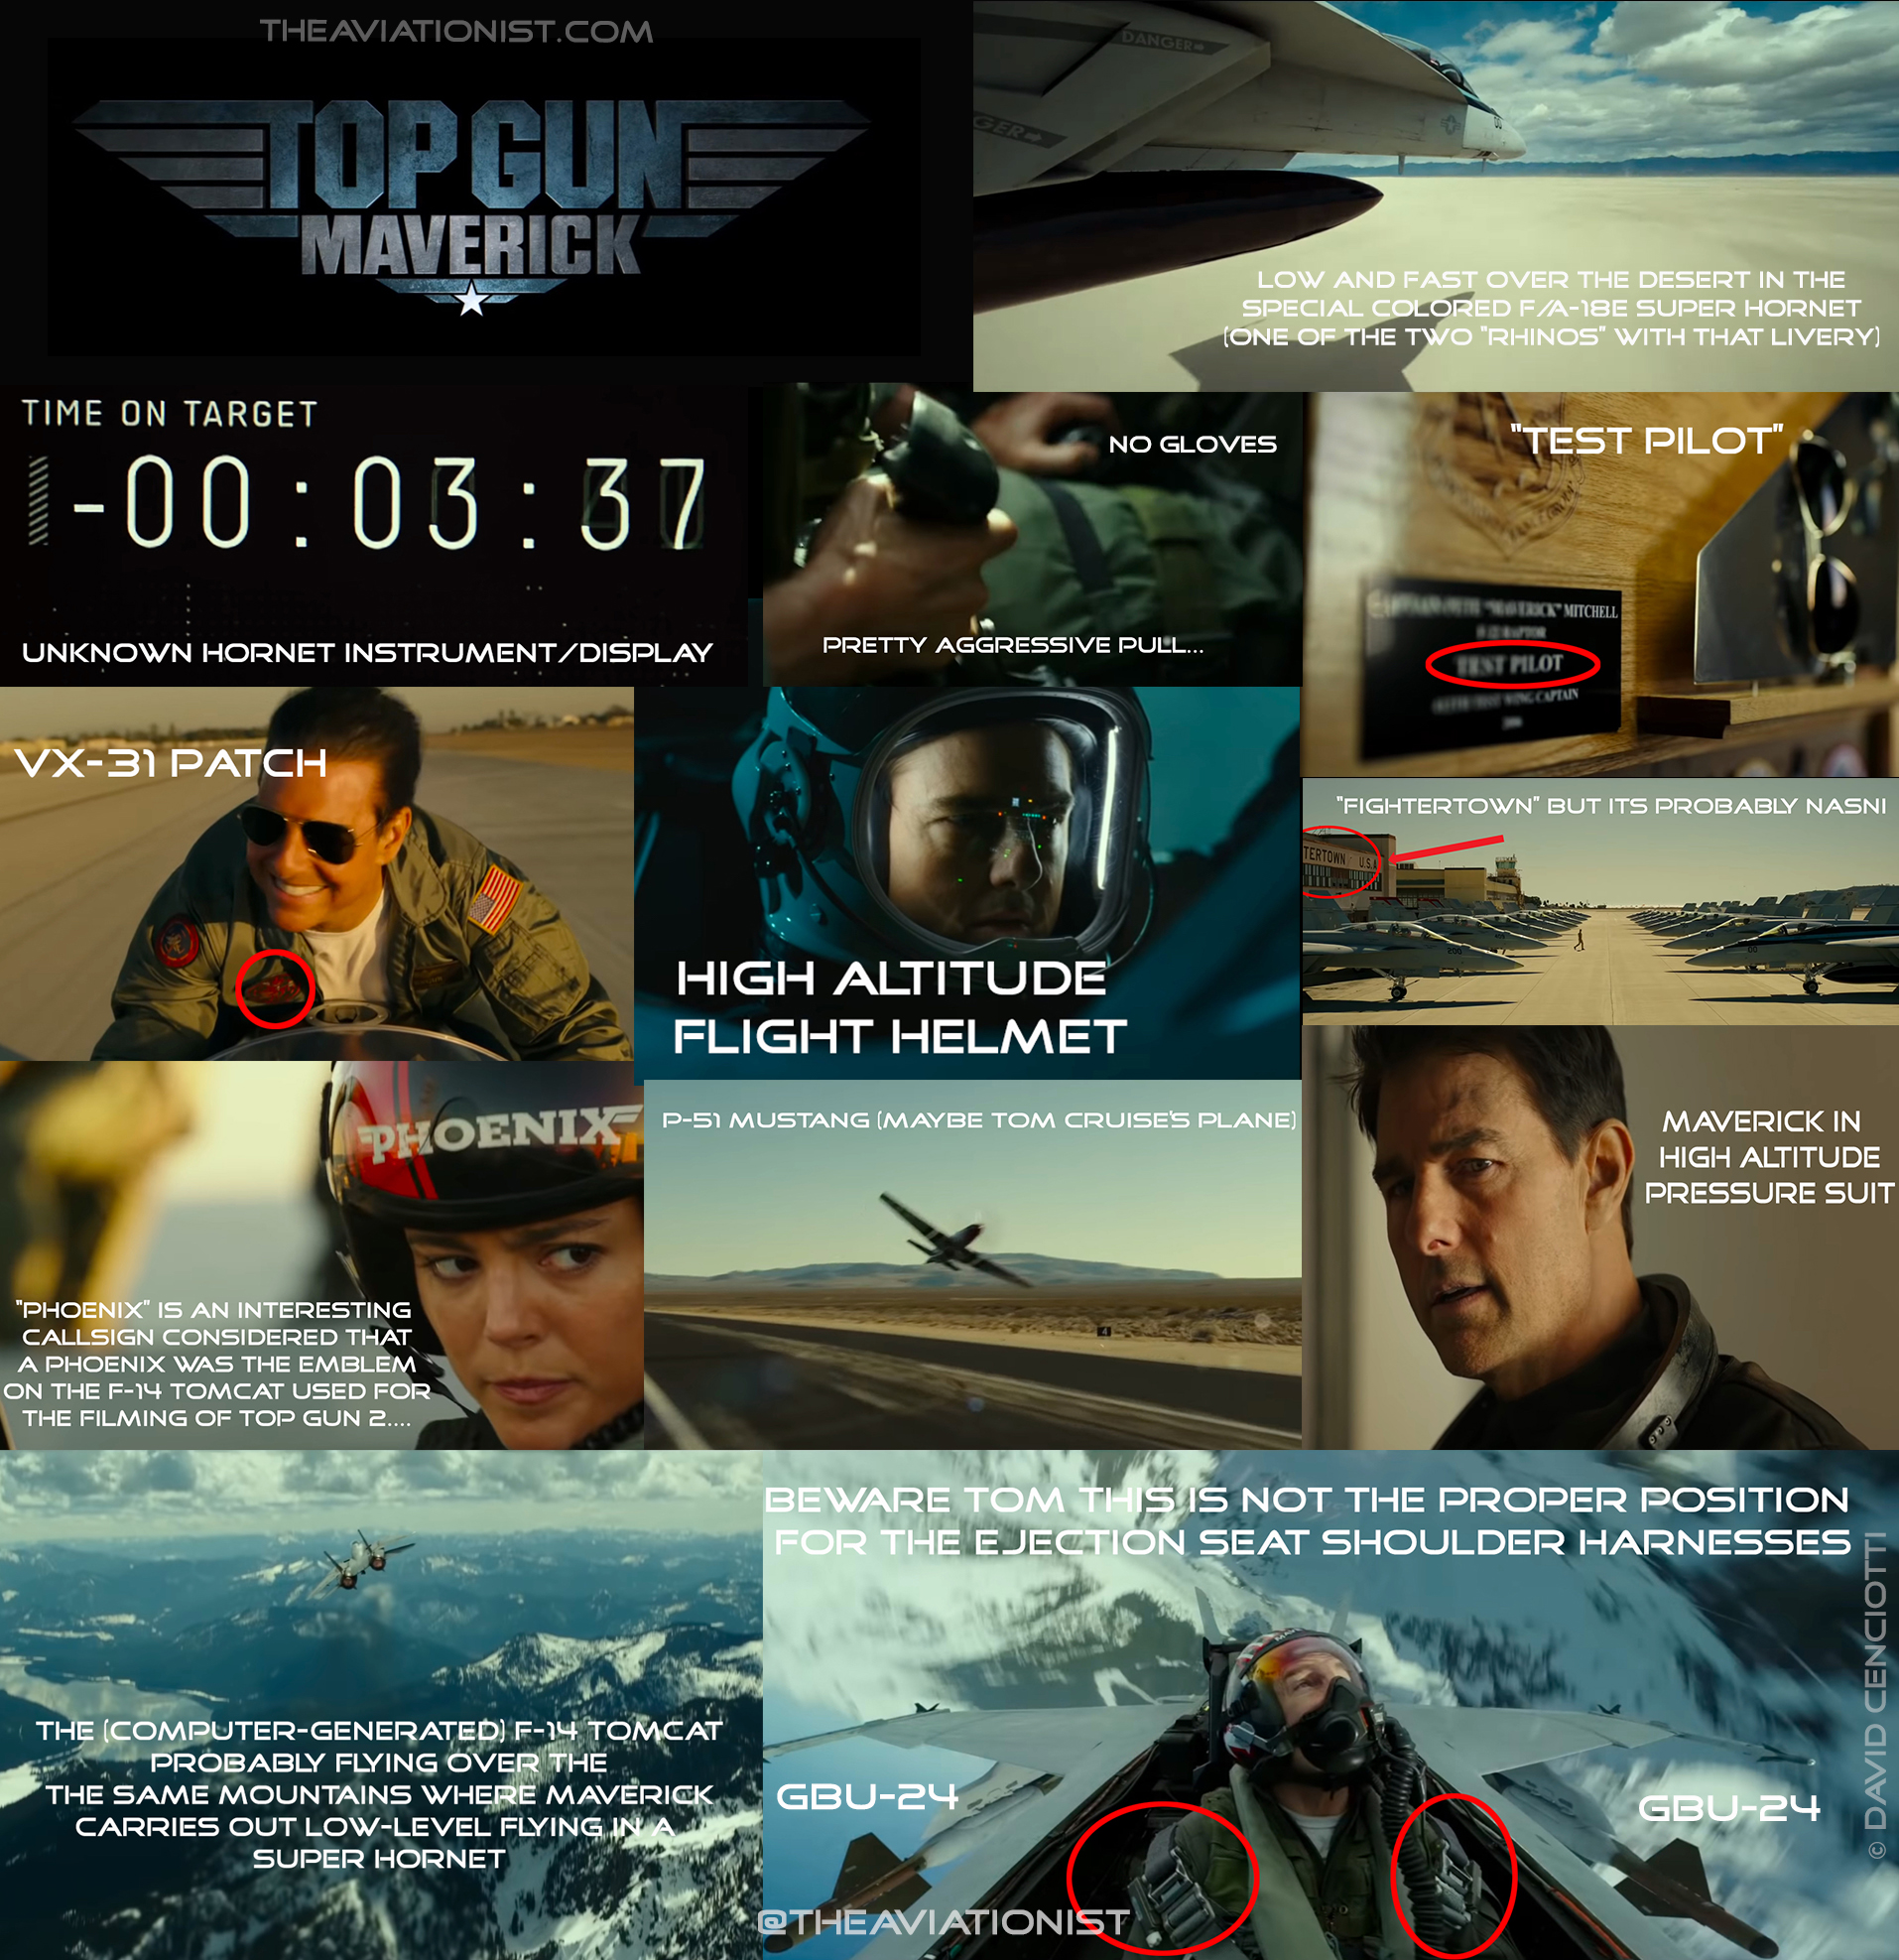 deltager Arbejdsløs kant Ladies And Gentlemen Here's the Official Trailer For "Top Gun: Maverick". -  The Aviationist